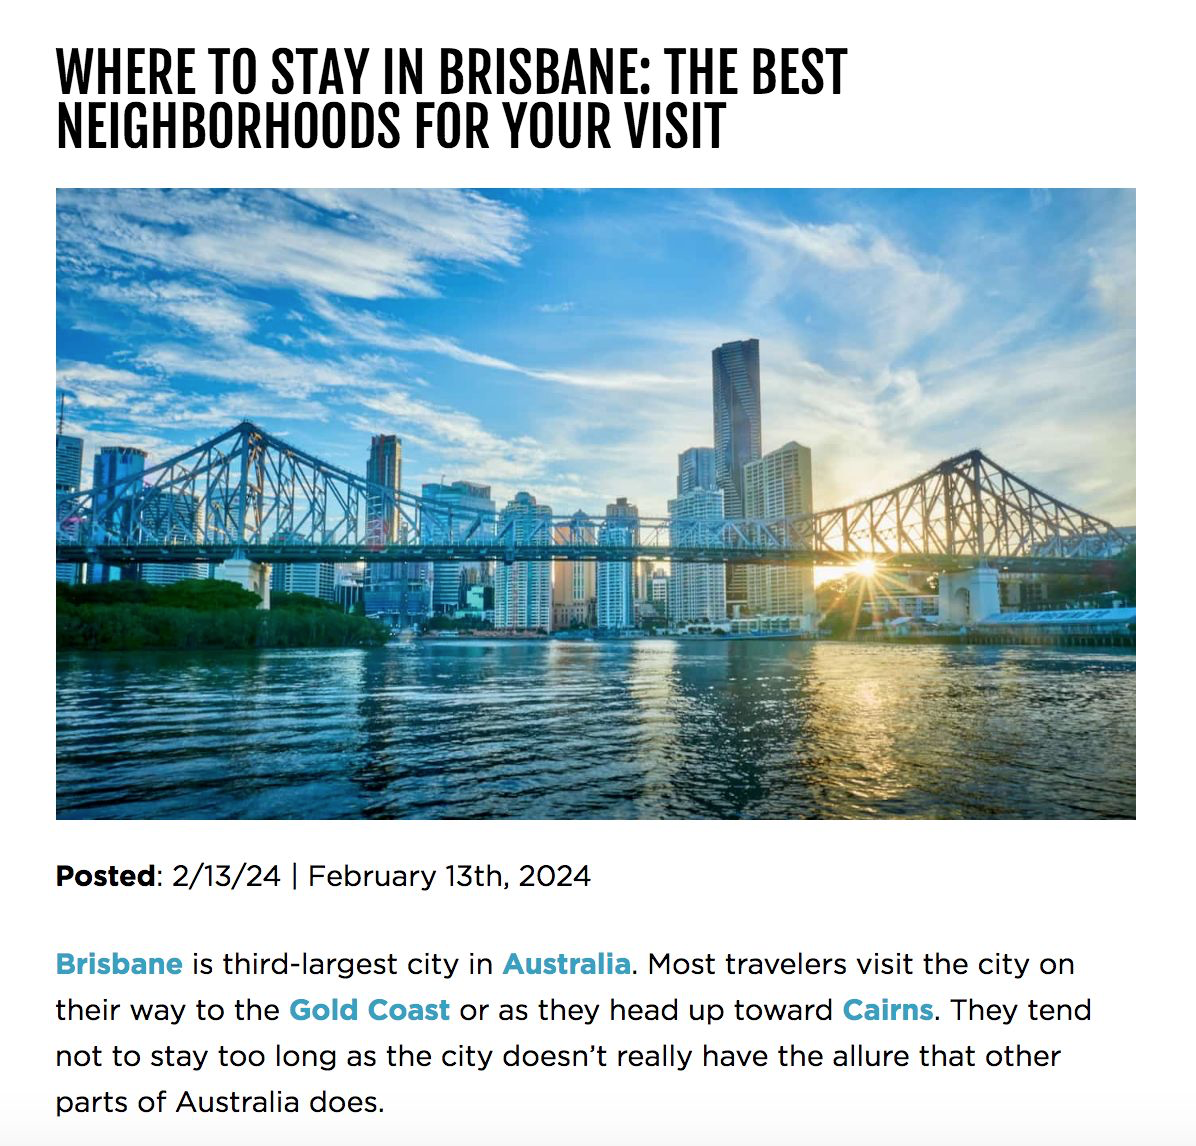 Nomadic Matt's blog post titled "Where to stay in Brisbane: The best neighborhoods for your visit"